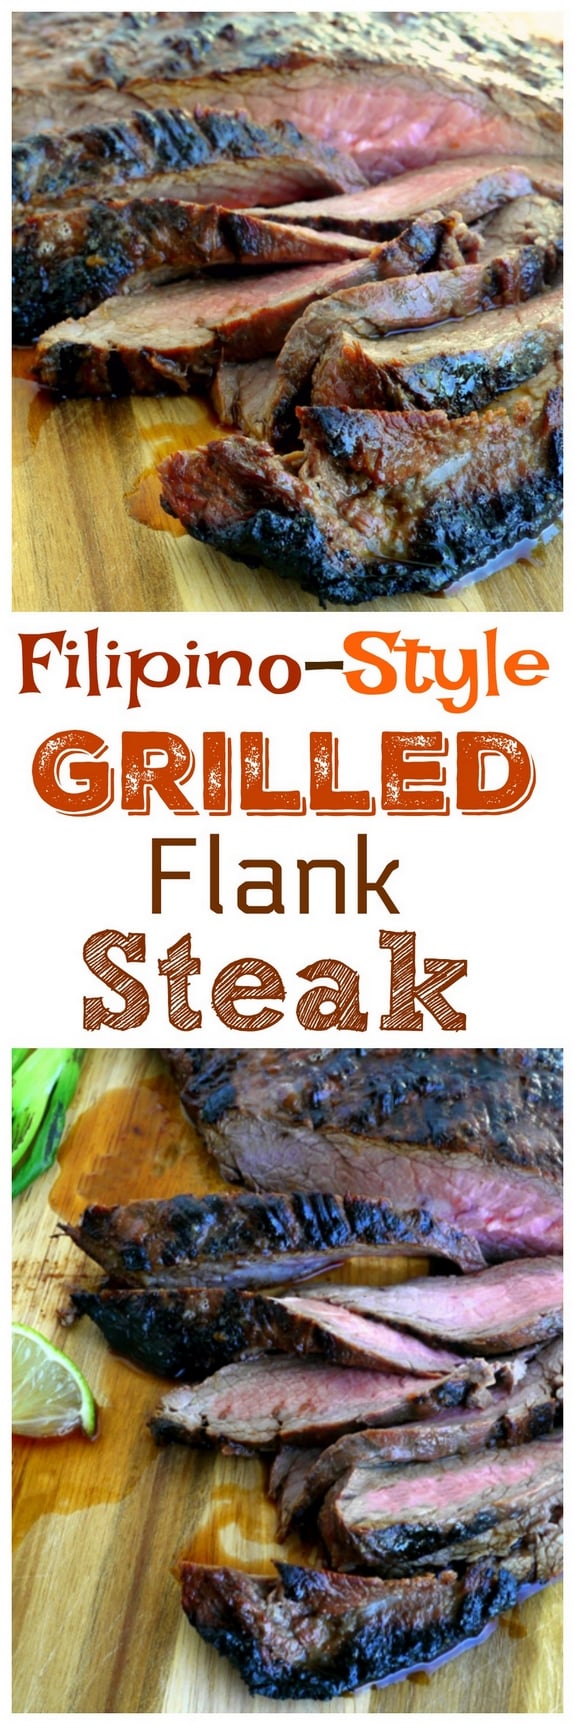 Filipino-Style Grilled Flank Steak 